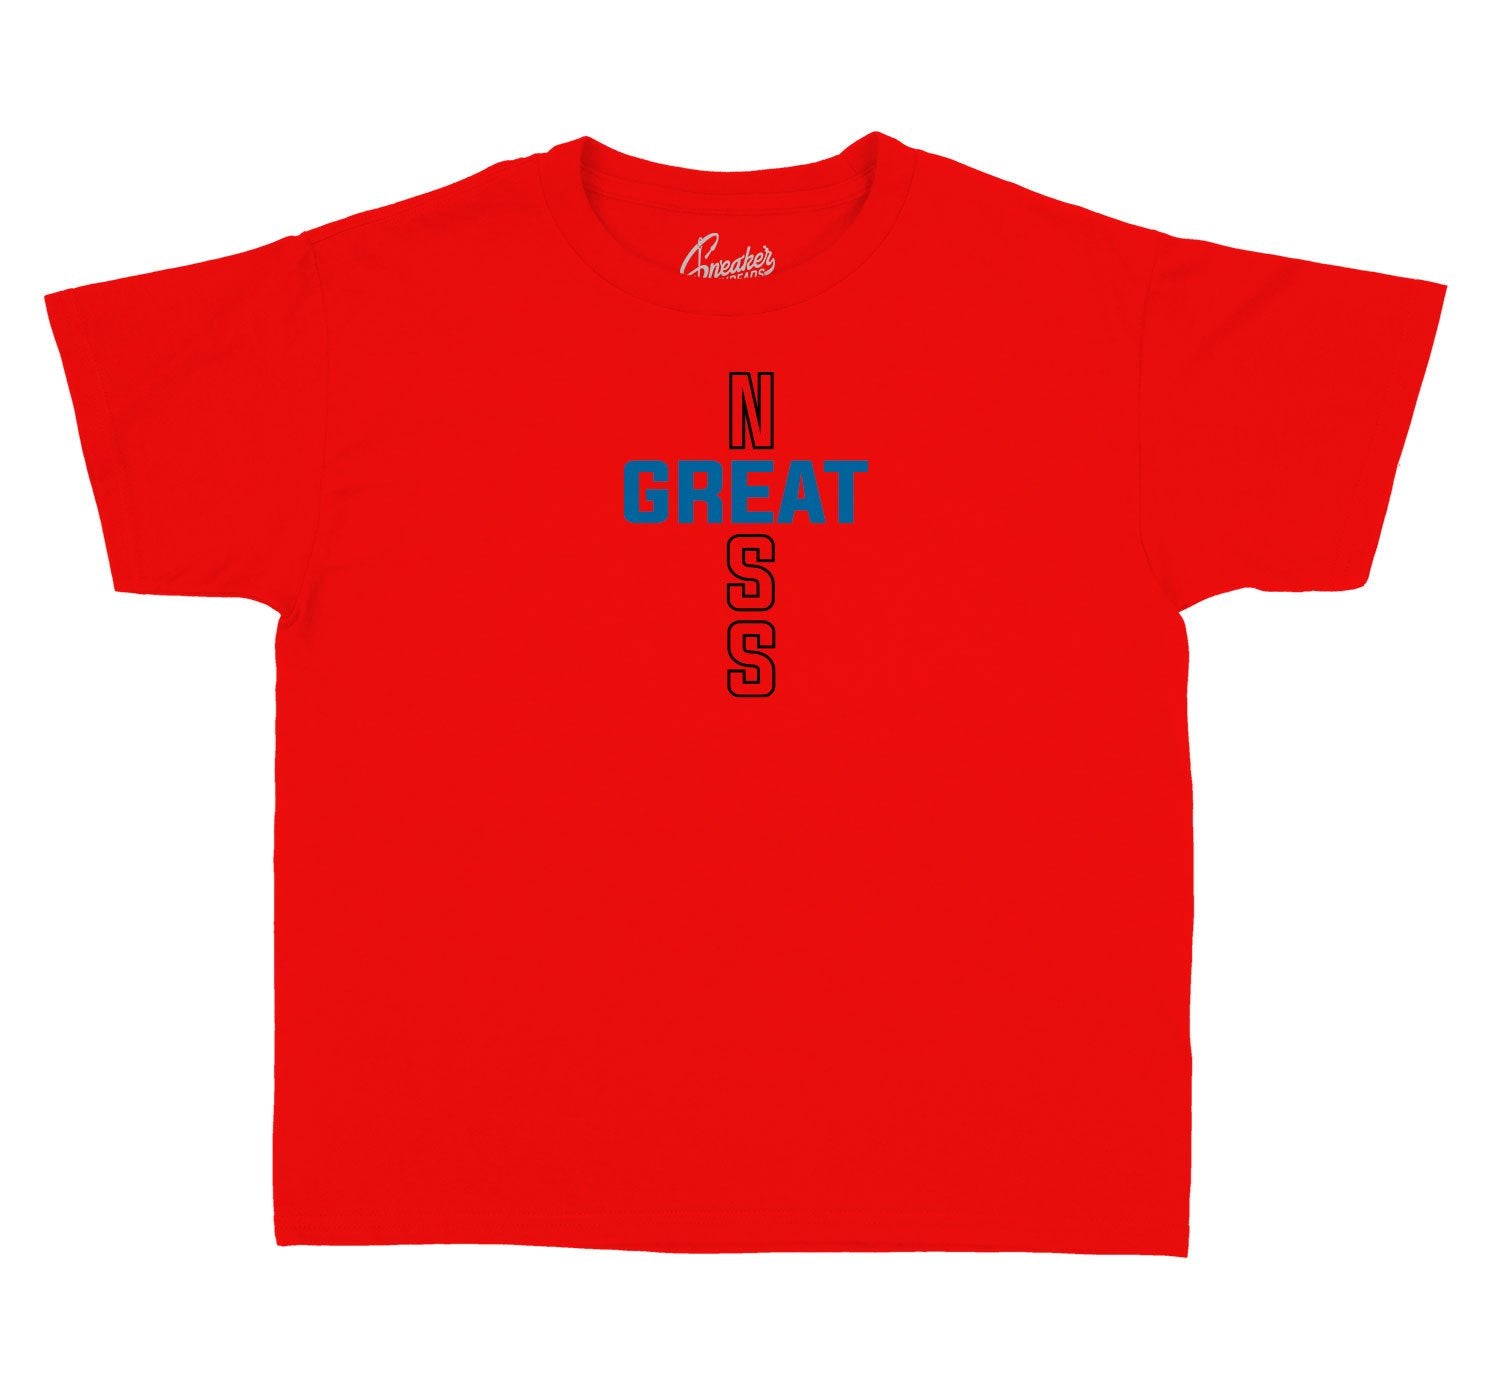 Jordan 4 What The Four Greatness Cross shirt for kids